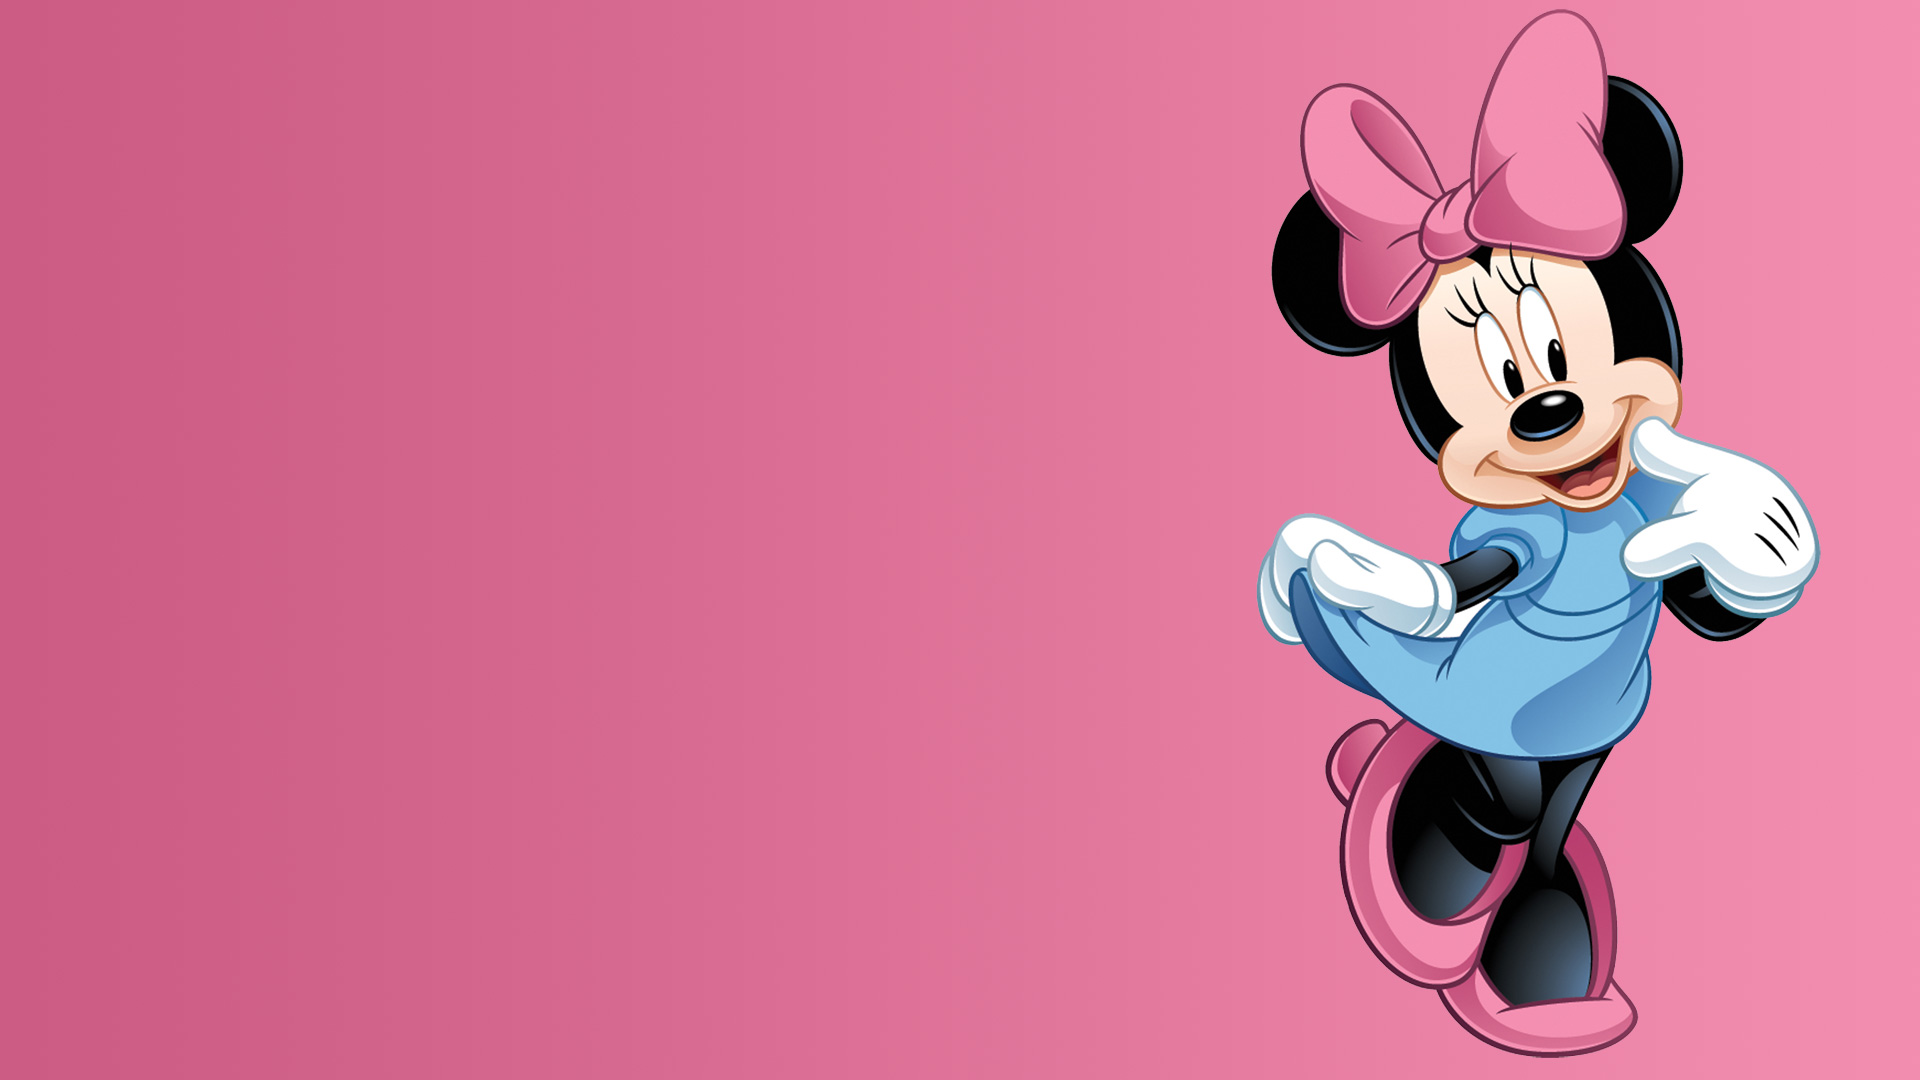 Minnie Mouse - minnie mouse Wallpaper (35300673) - Fanpop